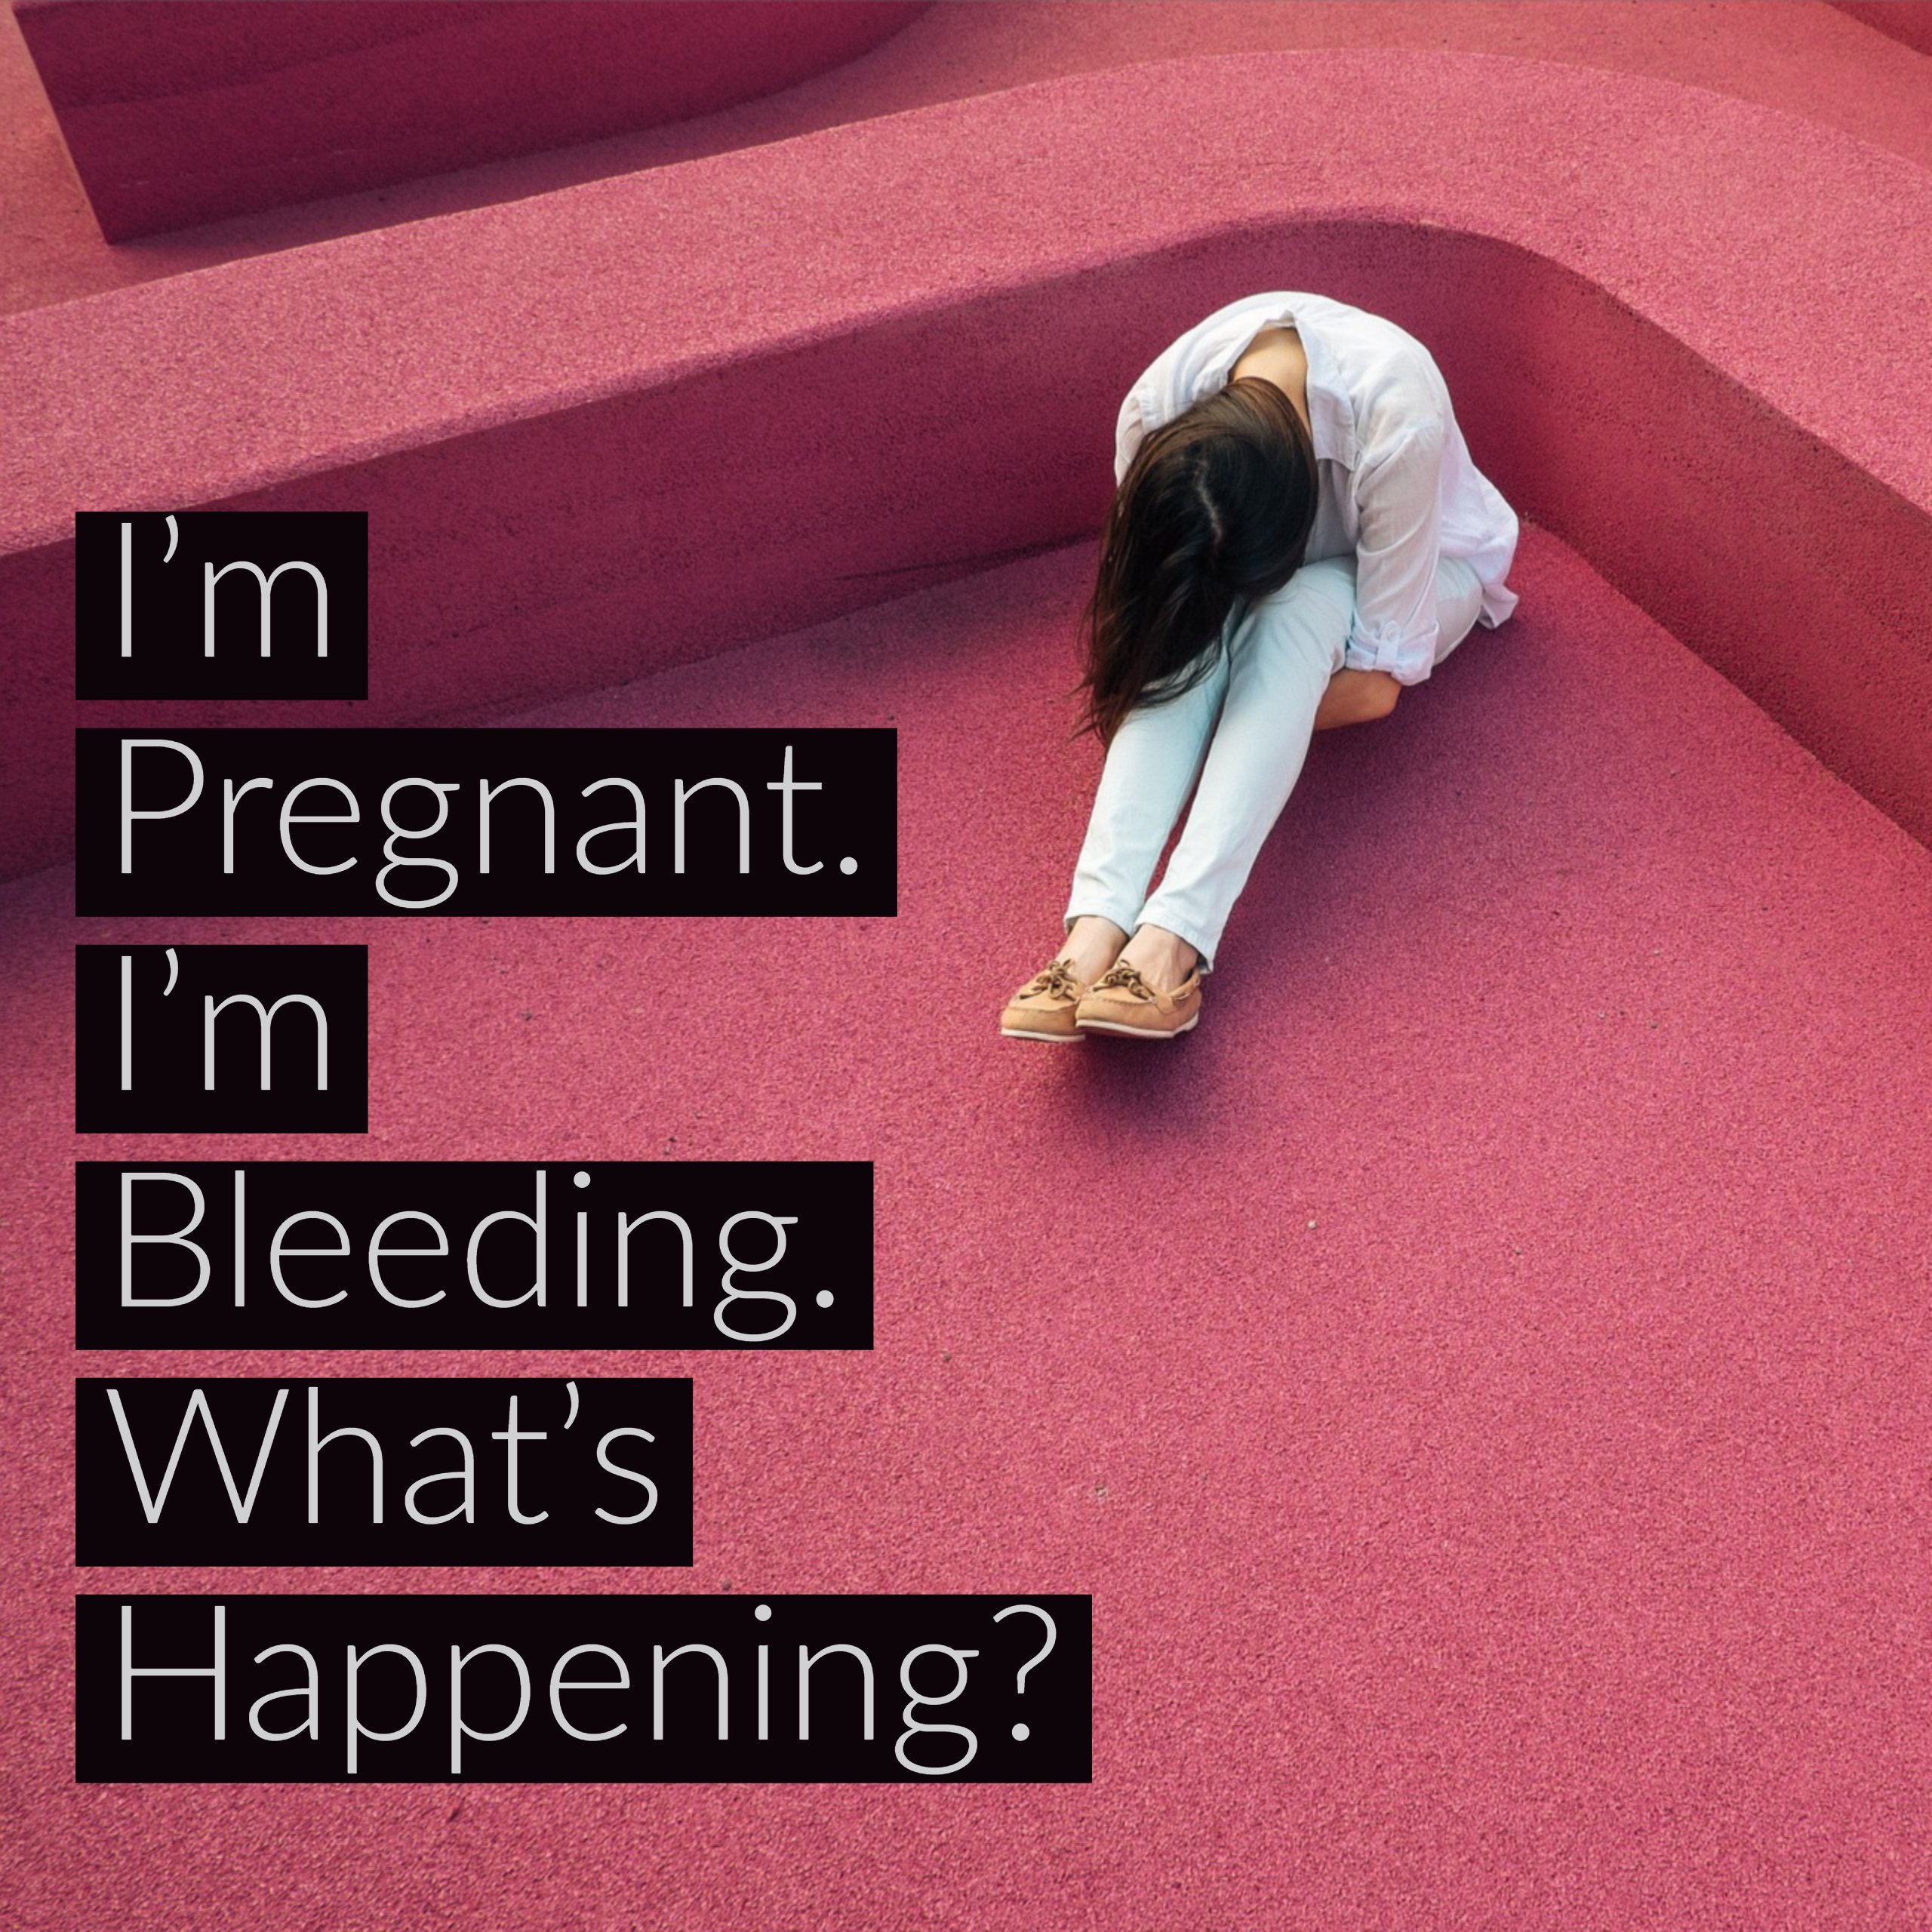 Im Pregnant and Im Bleeding